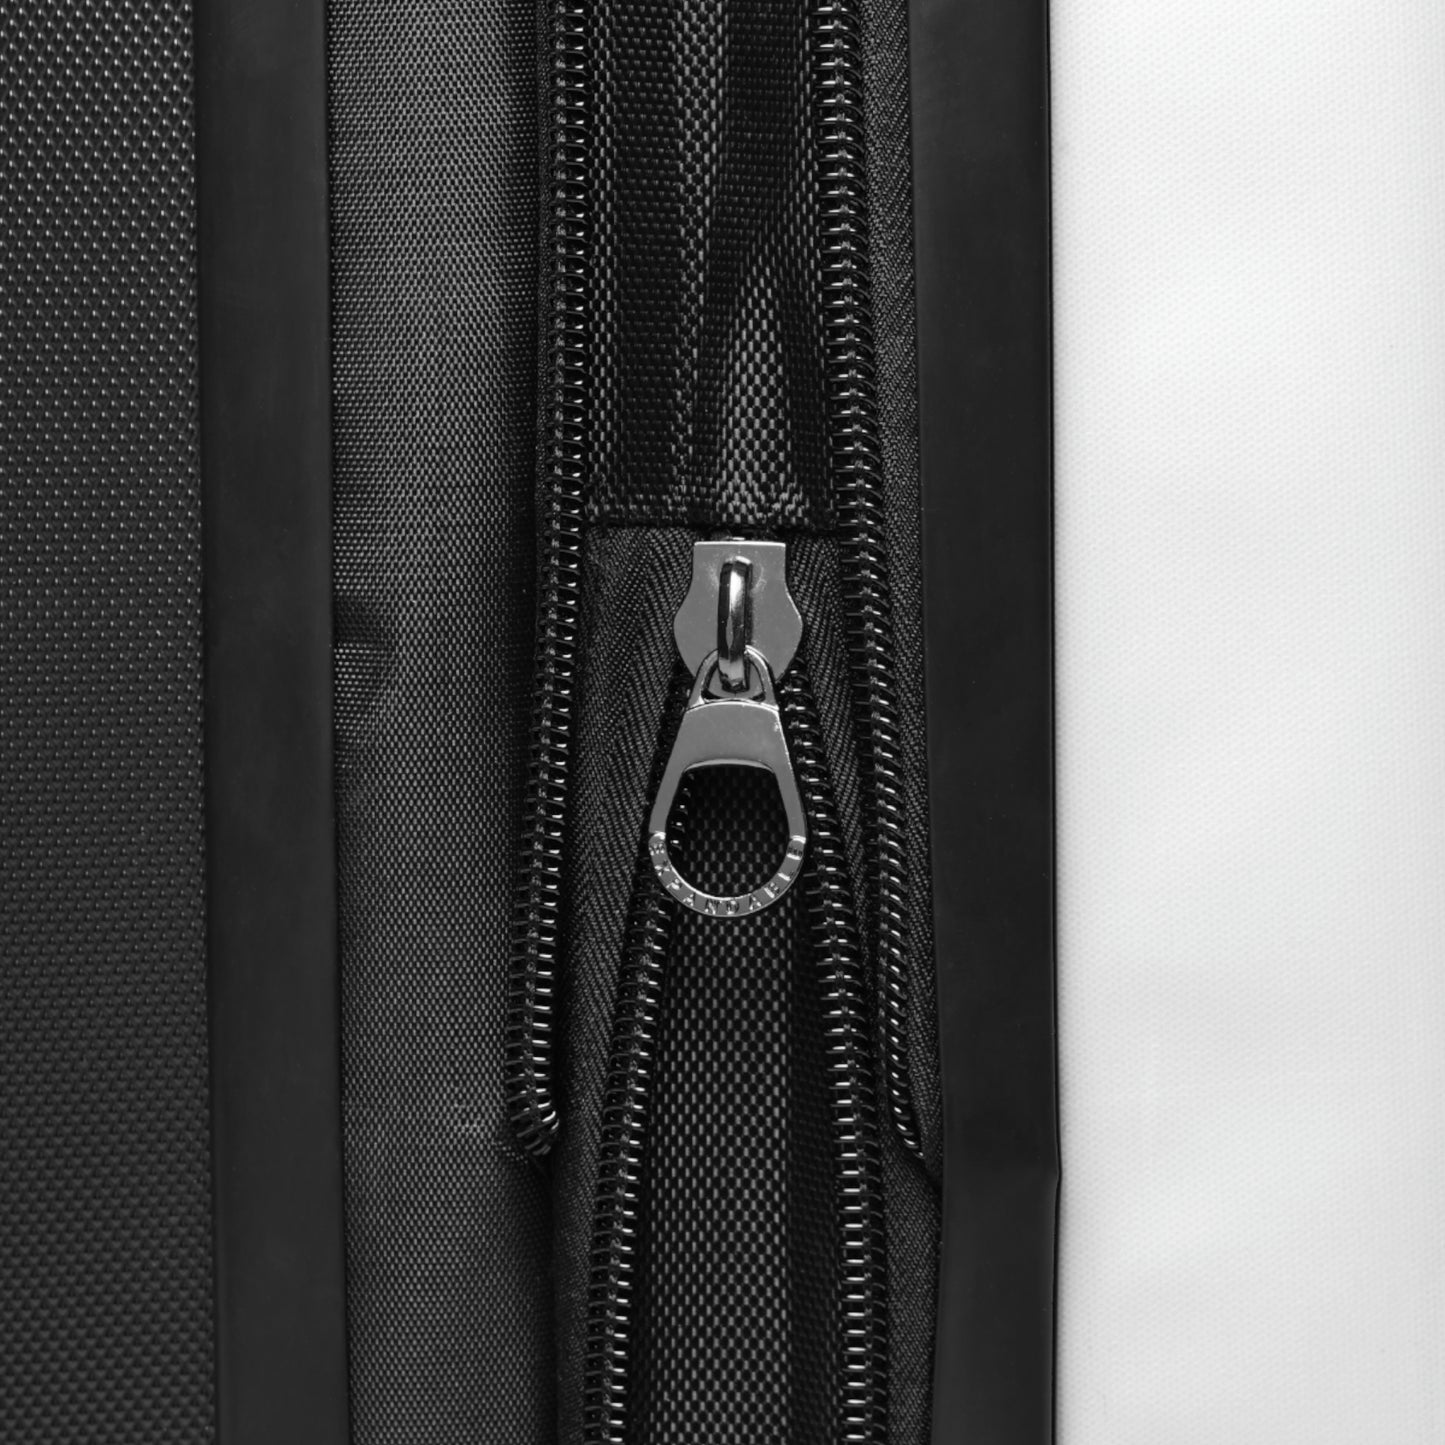 Temecula Carry on Suitcase (+2 Sizes)